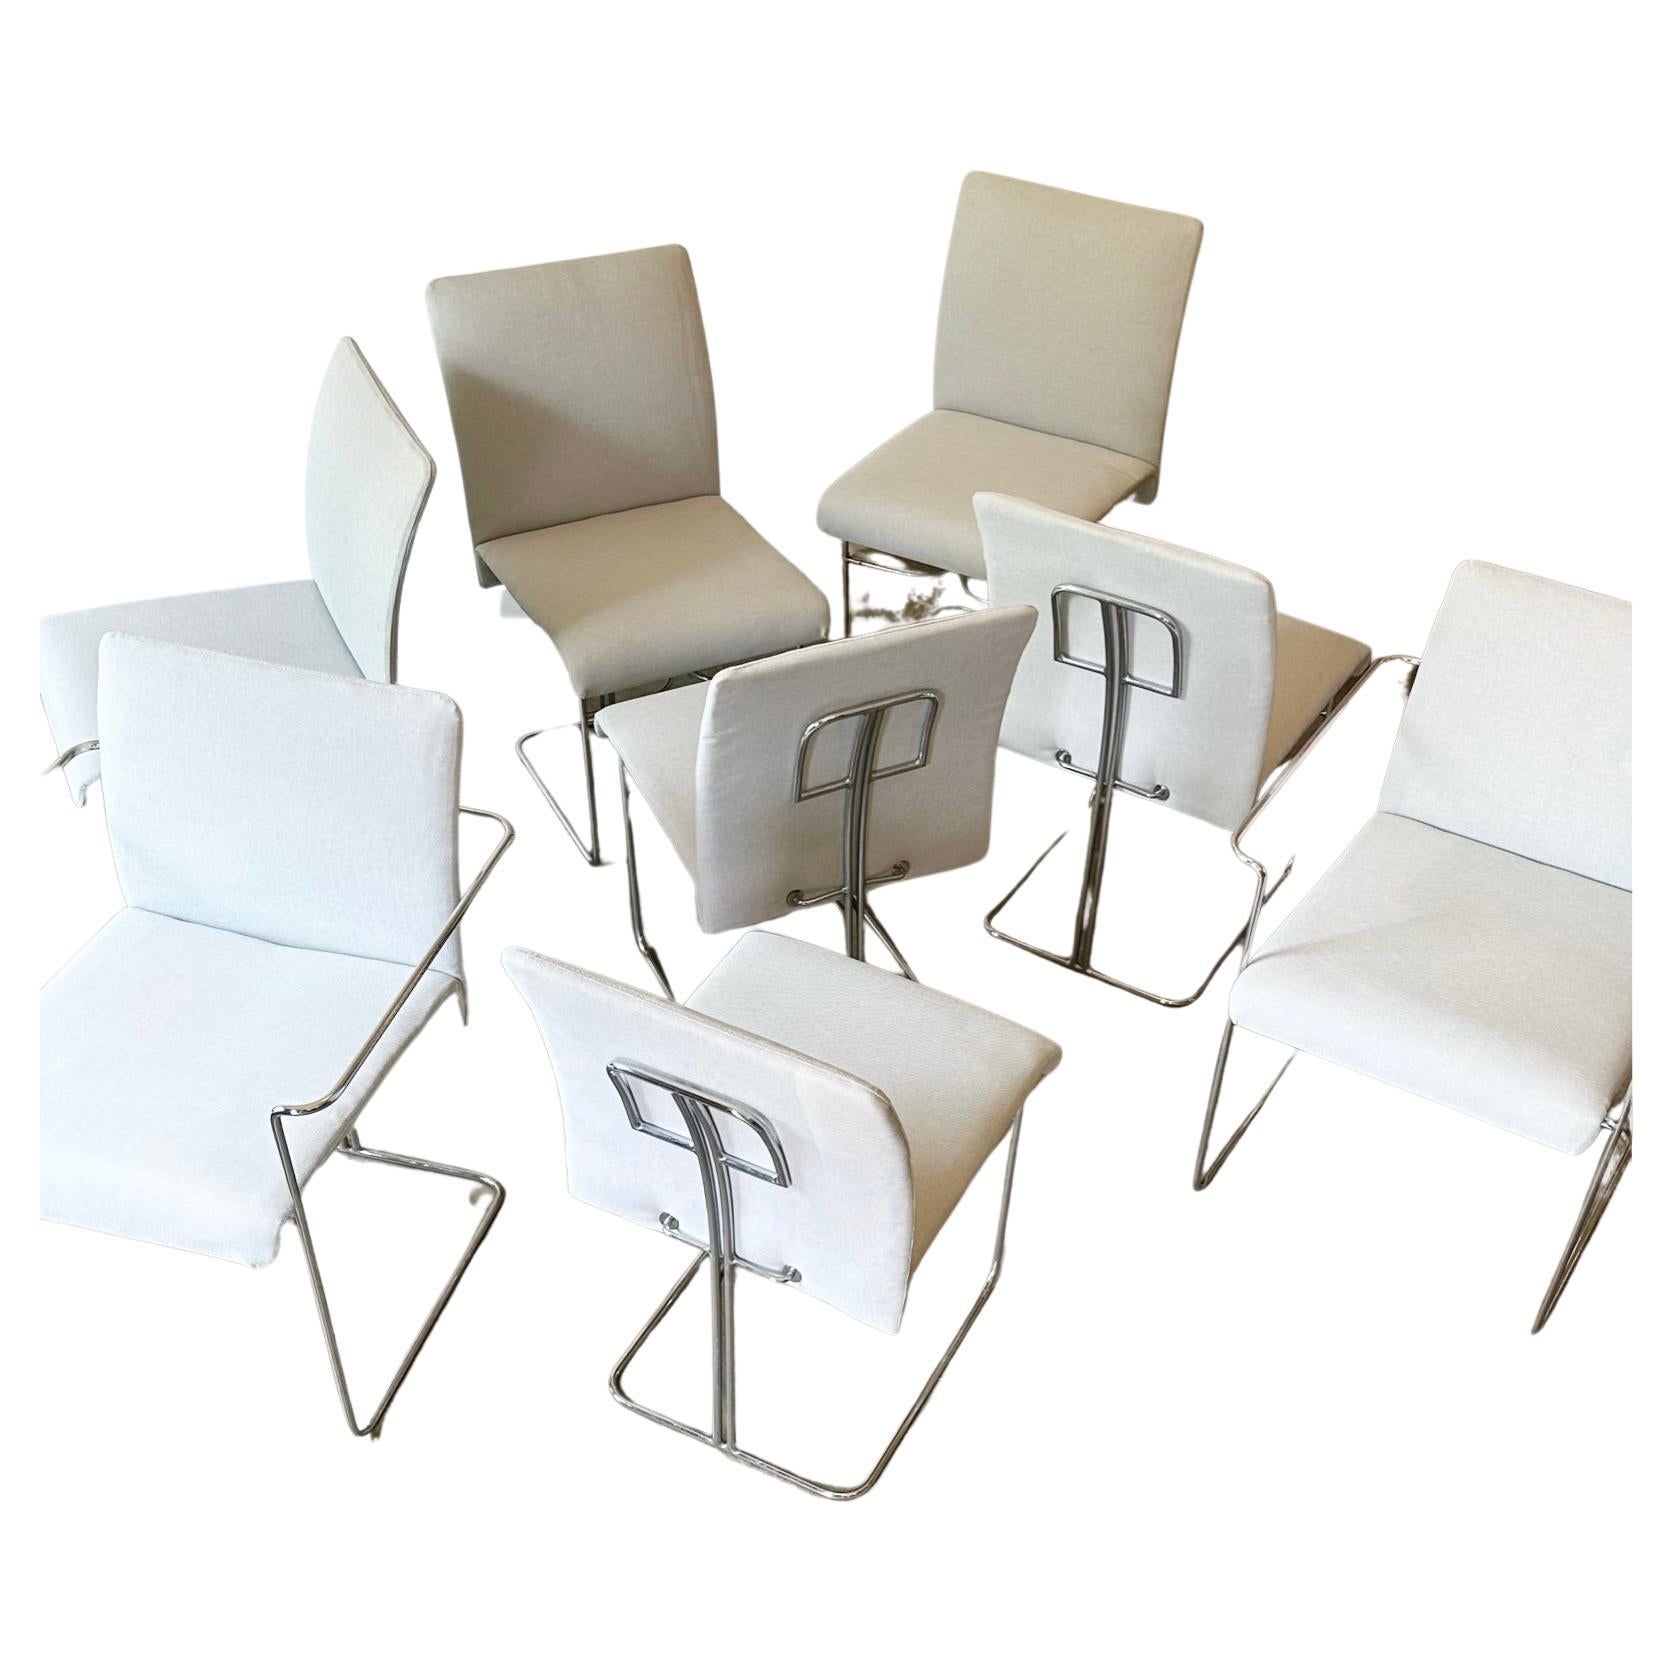 Set of 8 1970's Saporiti Italia Chrome Chairs by Ernesto Redaelli - Knoll Fabric